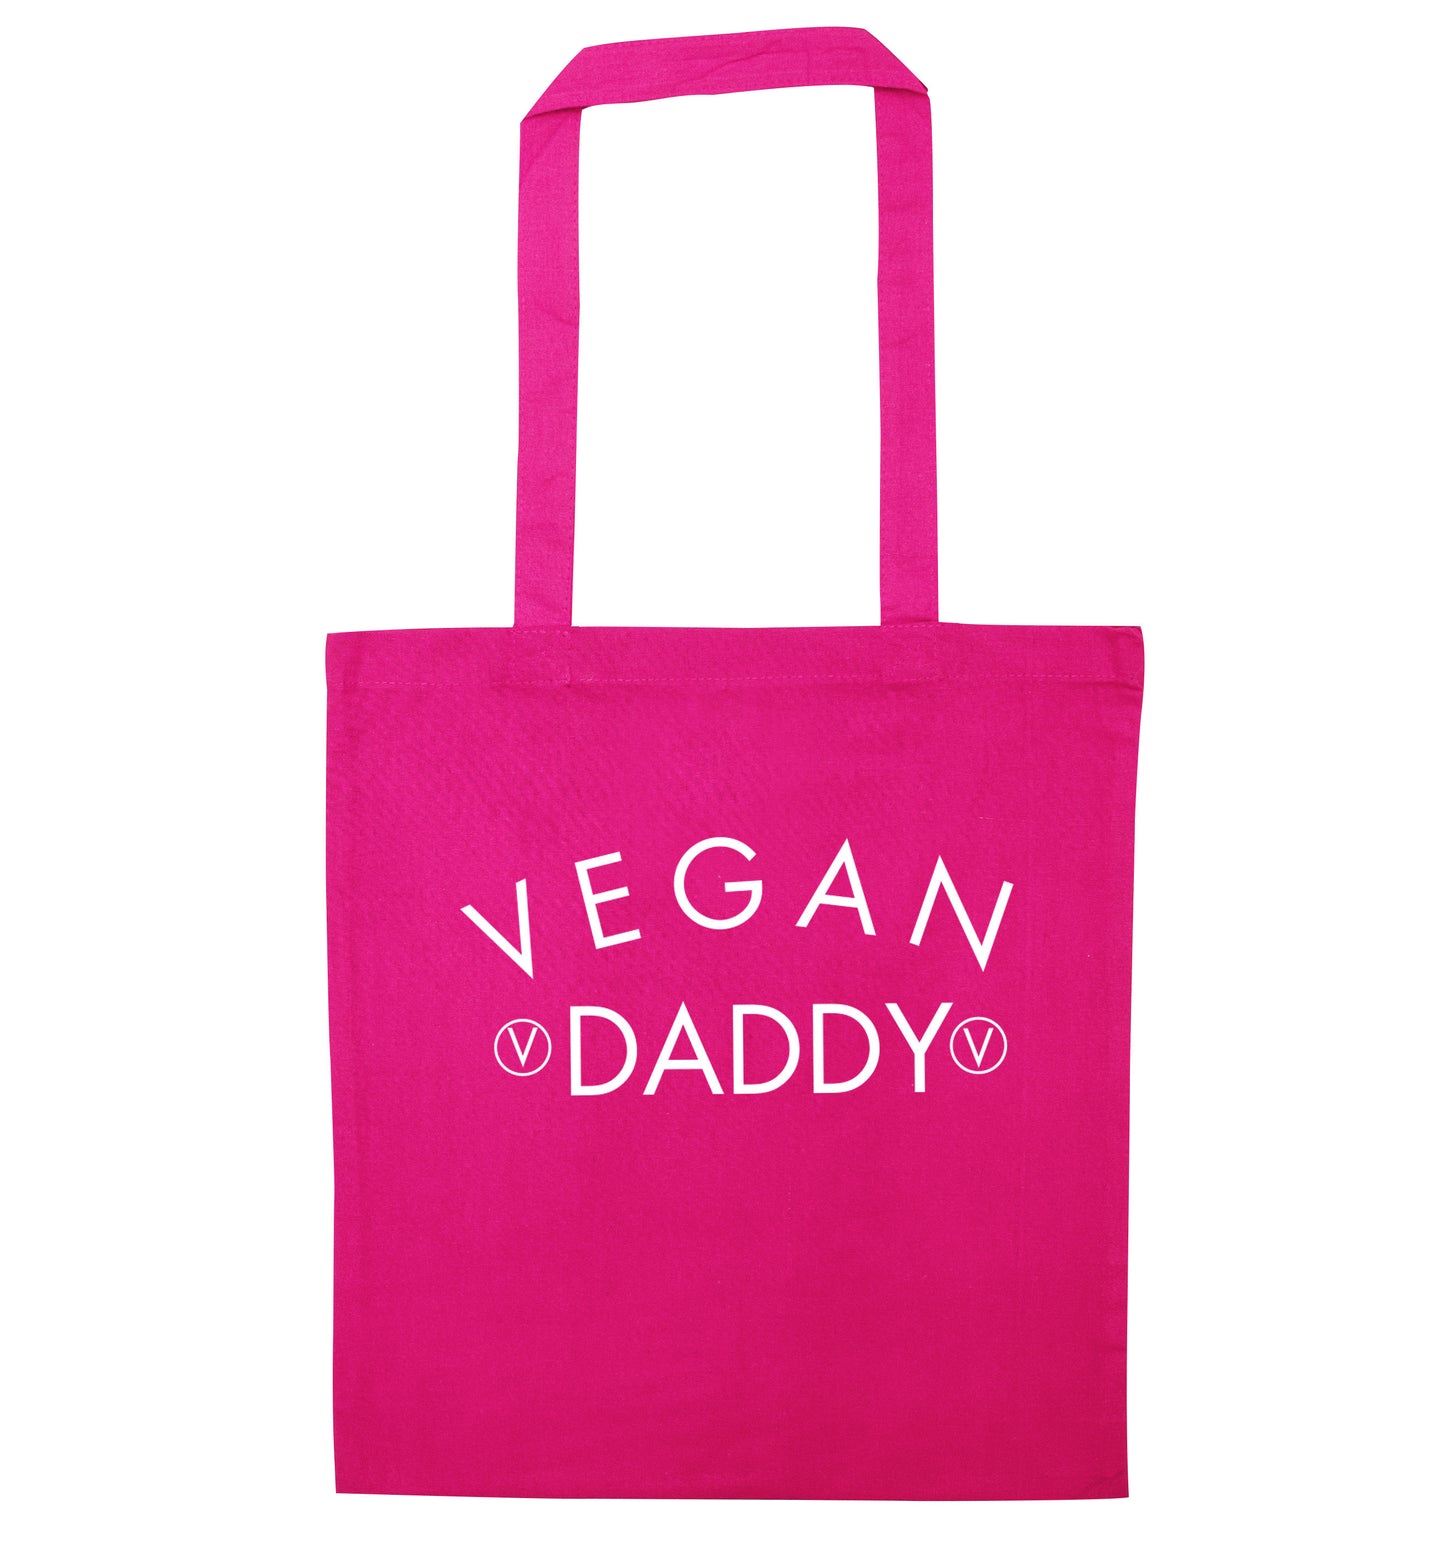 Vegan daddy pink tote bag